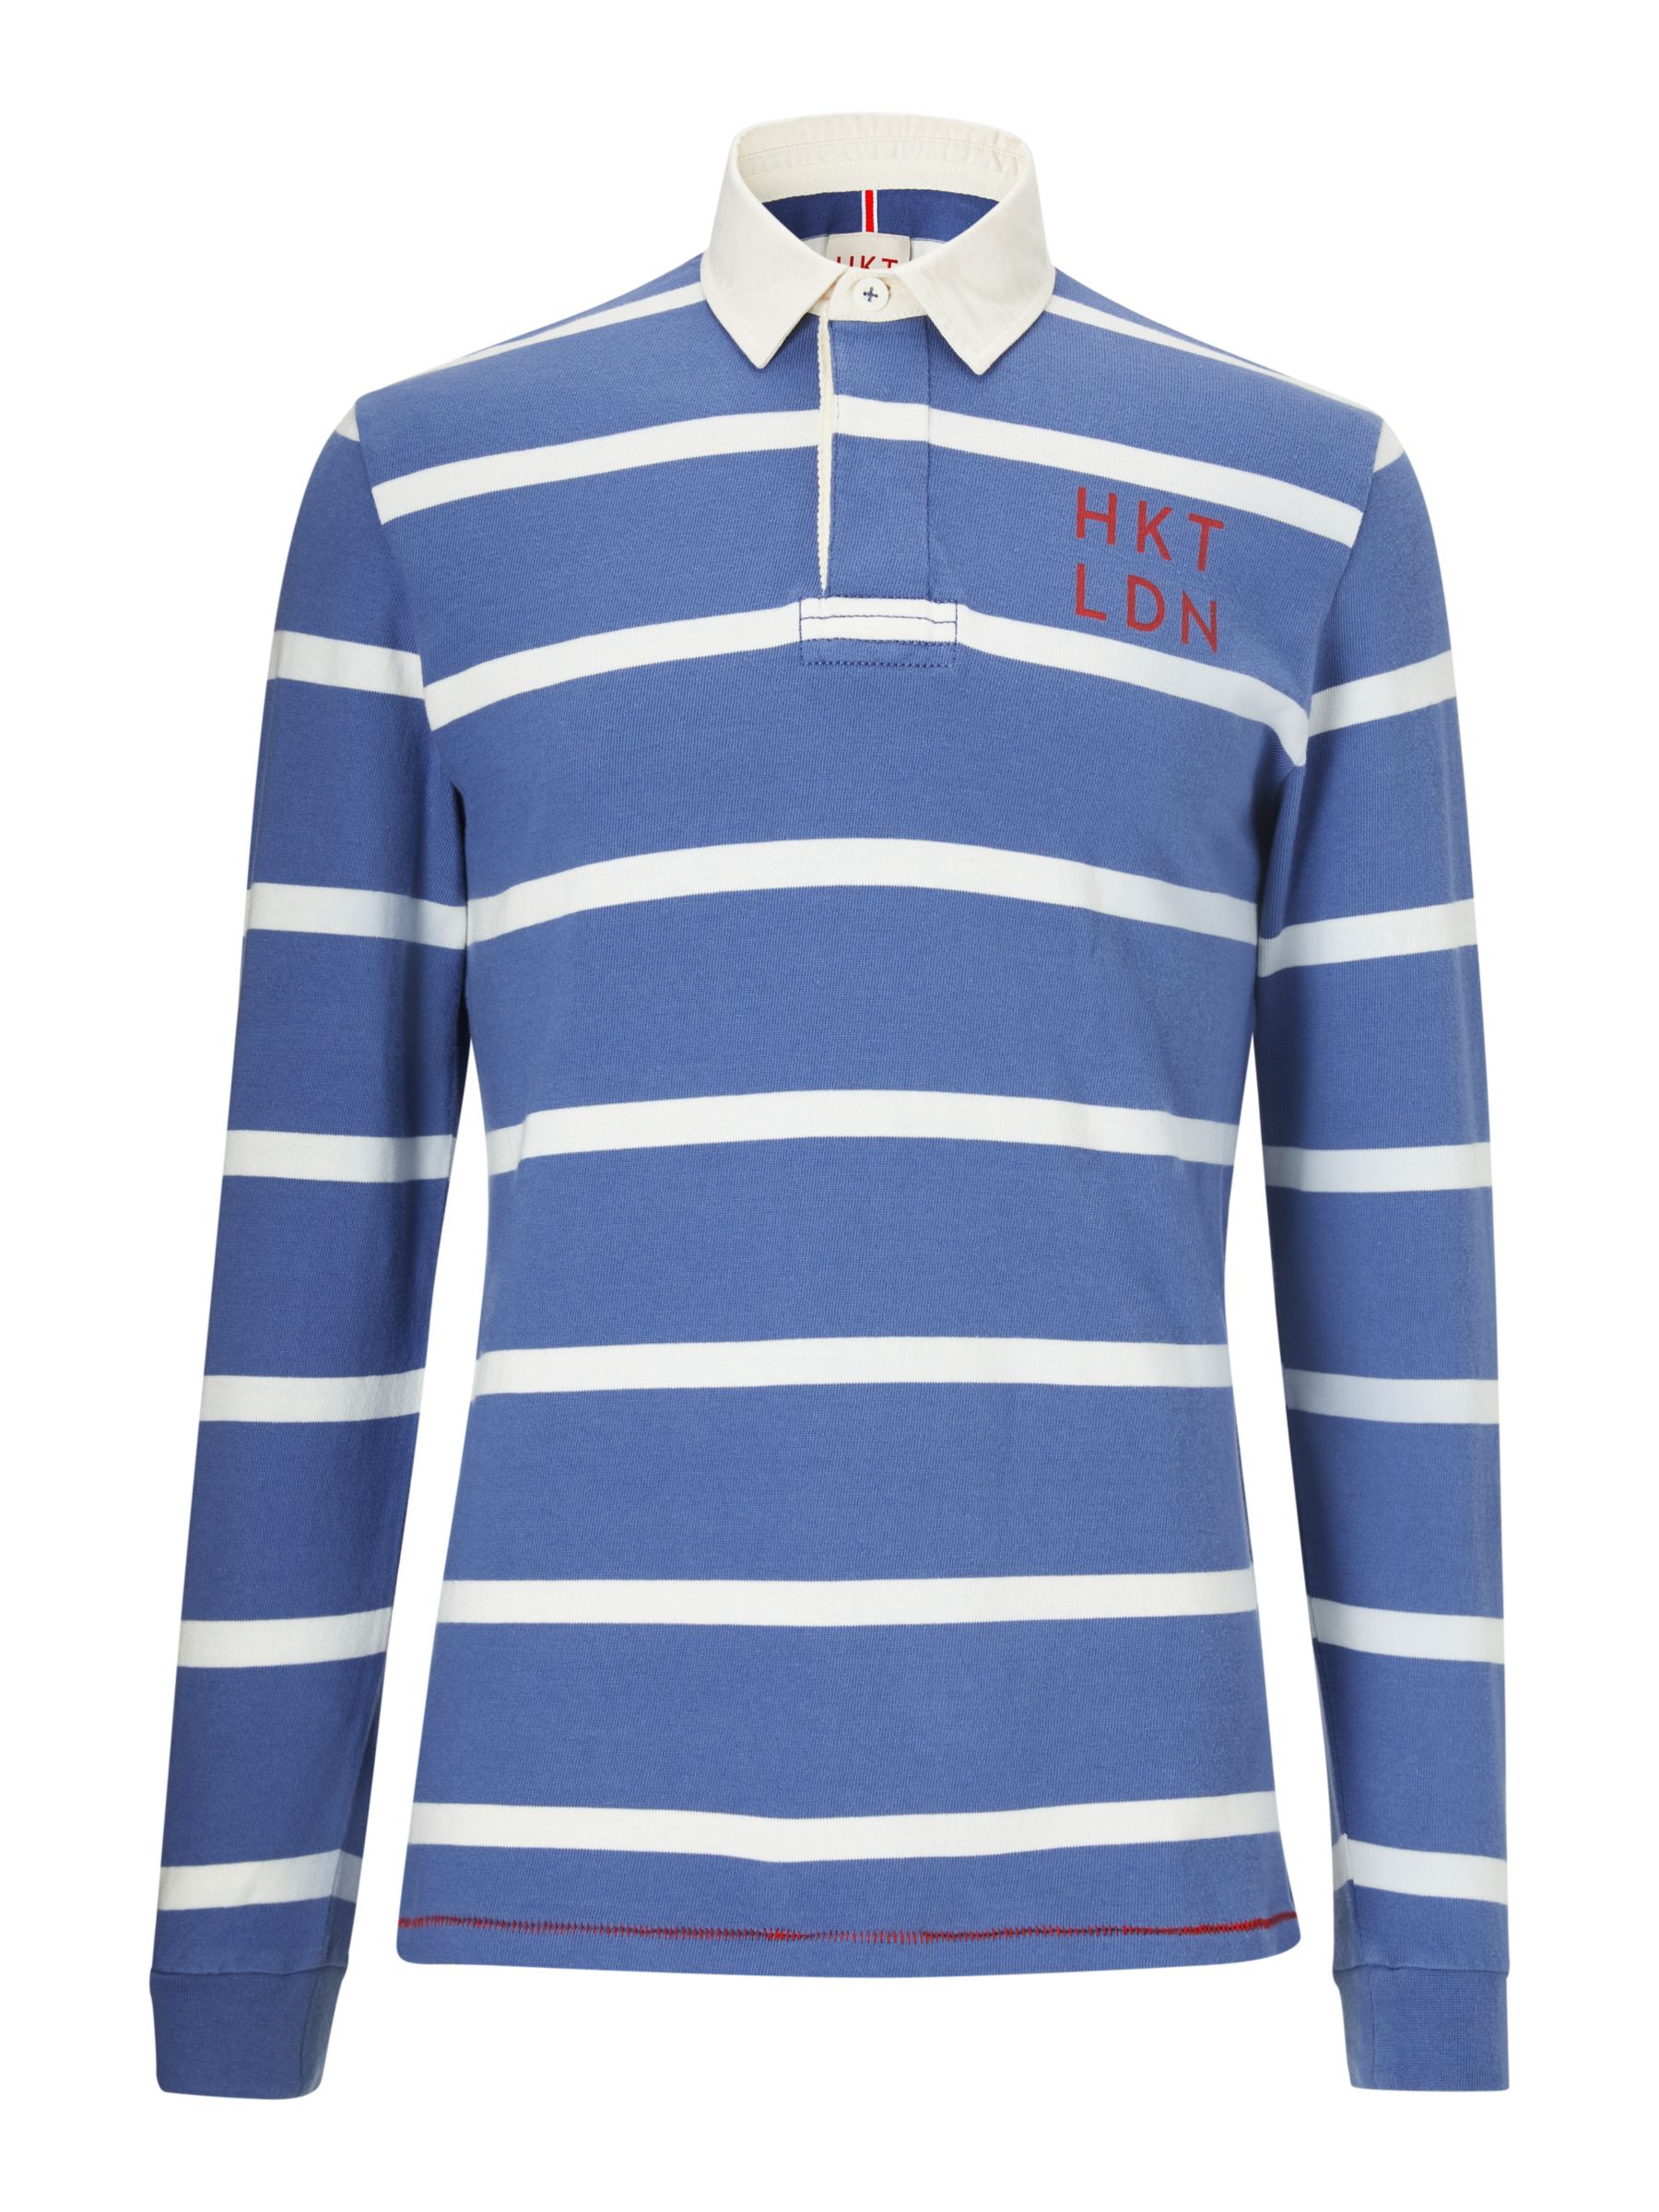 HKT Nautical Stripe Cotton Rugby Shirt, Petrol at John Lewis & Partners